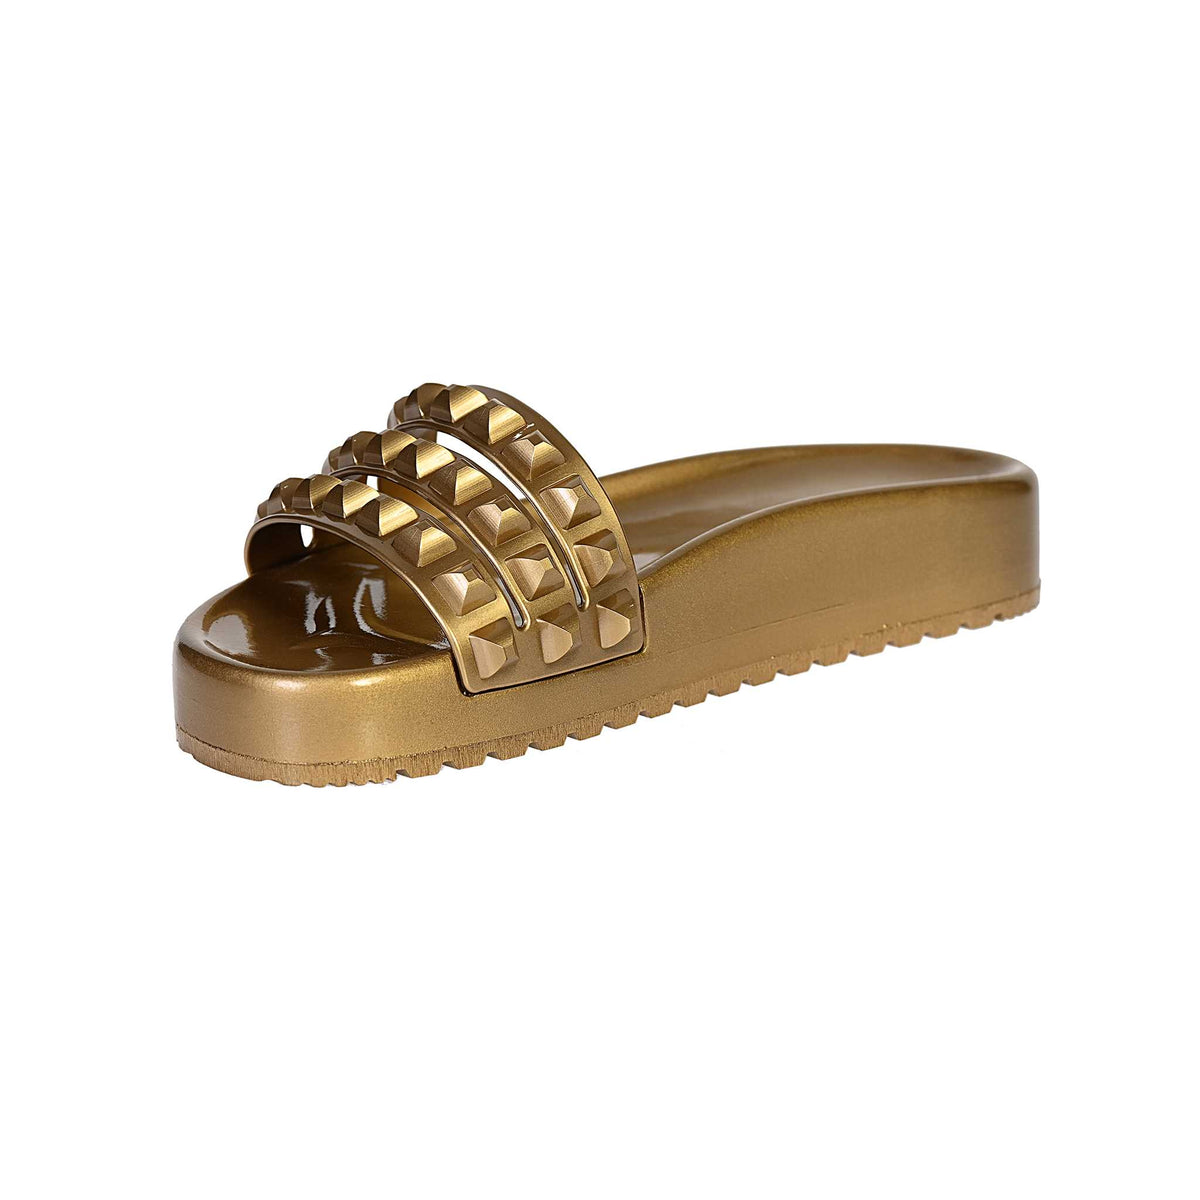 Gold slide sandals from carmen sol, night out party women sandals, platform slides